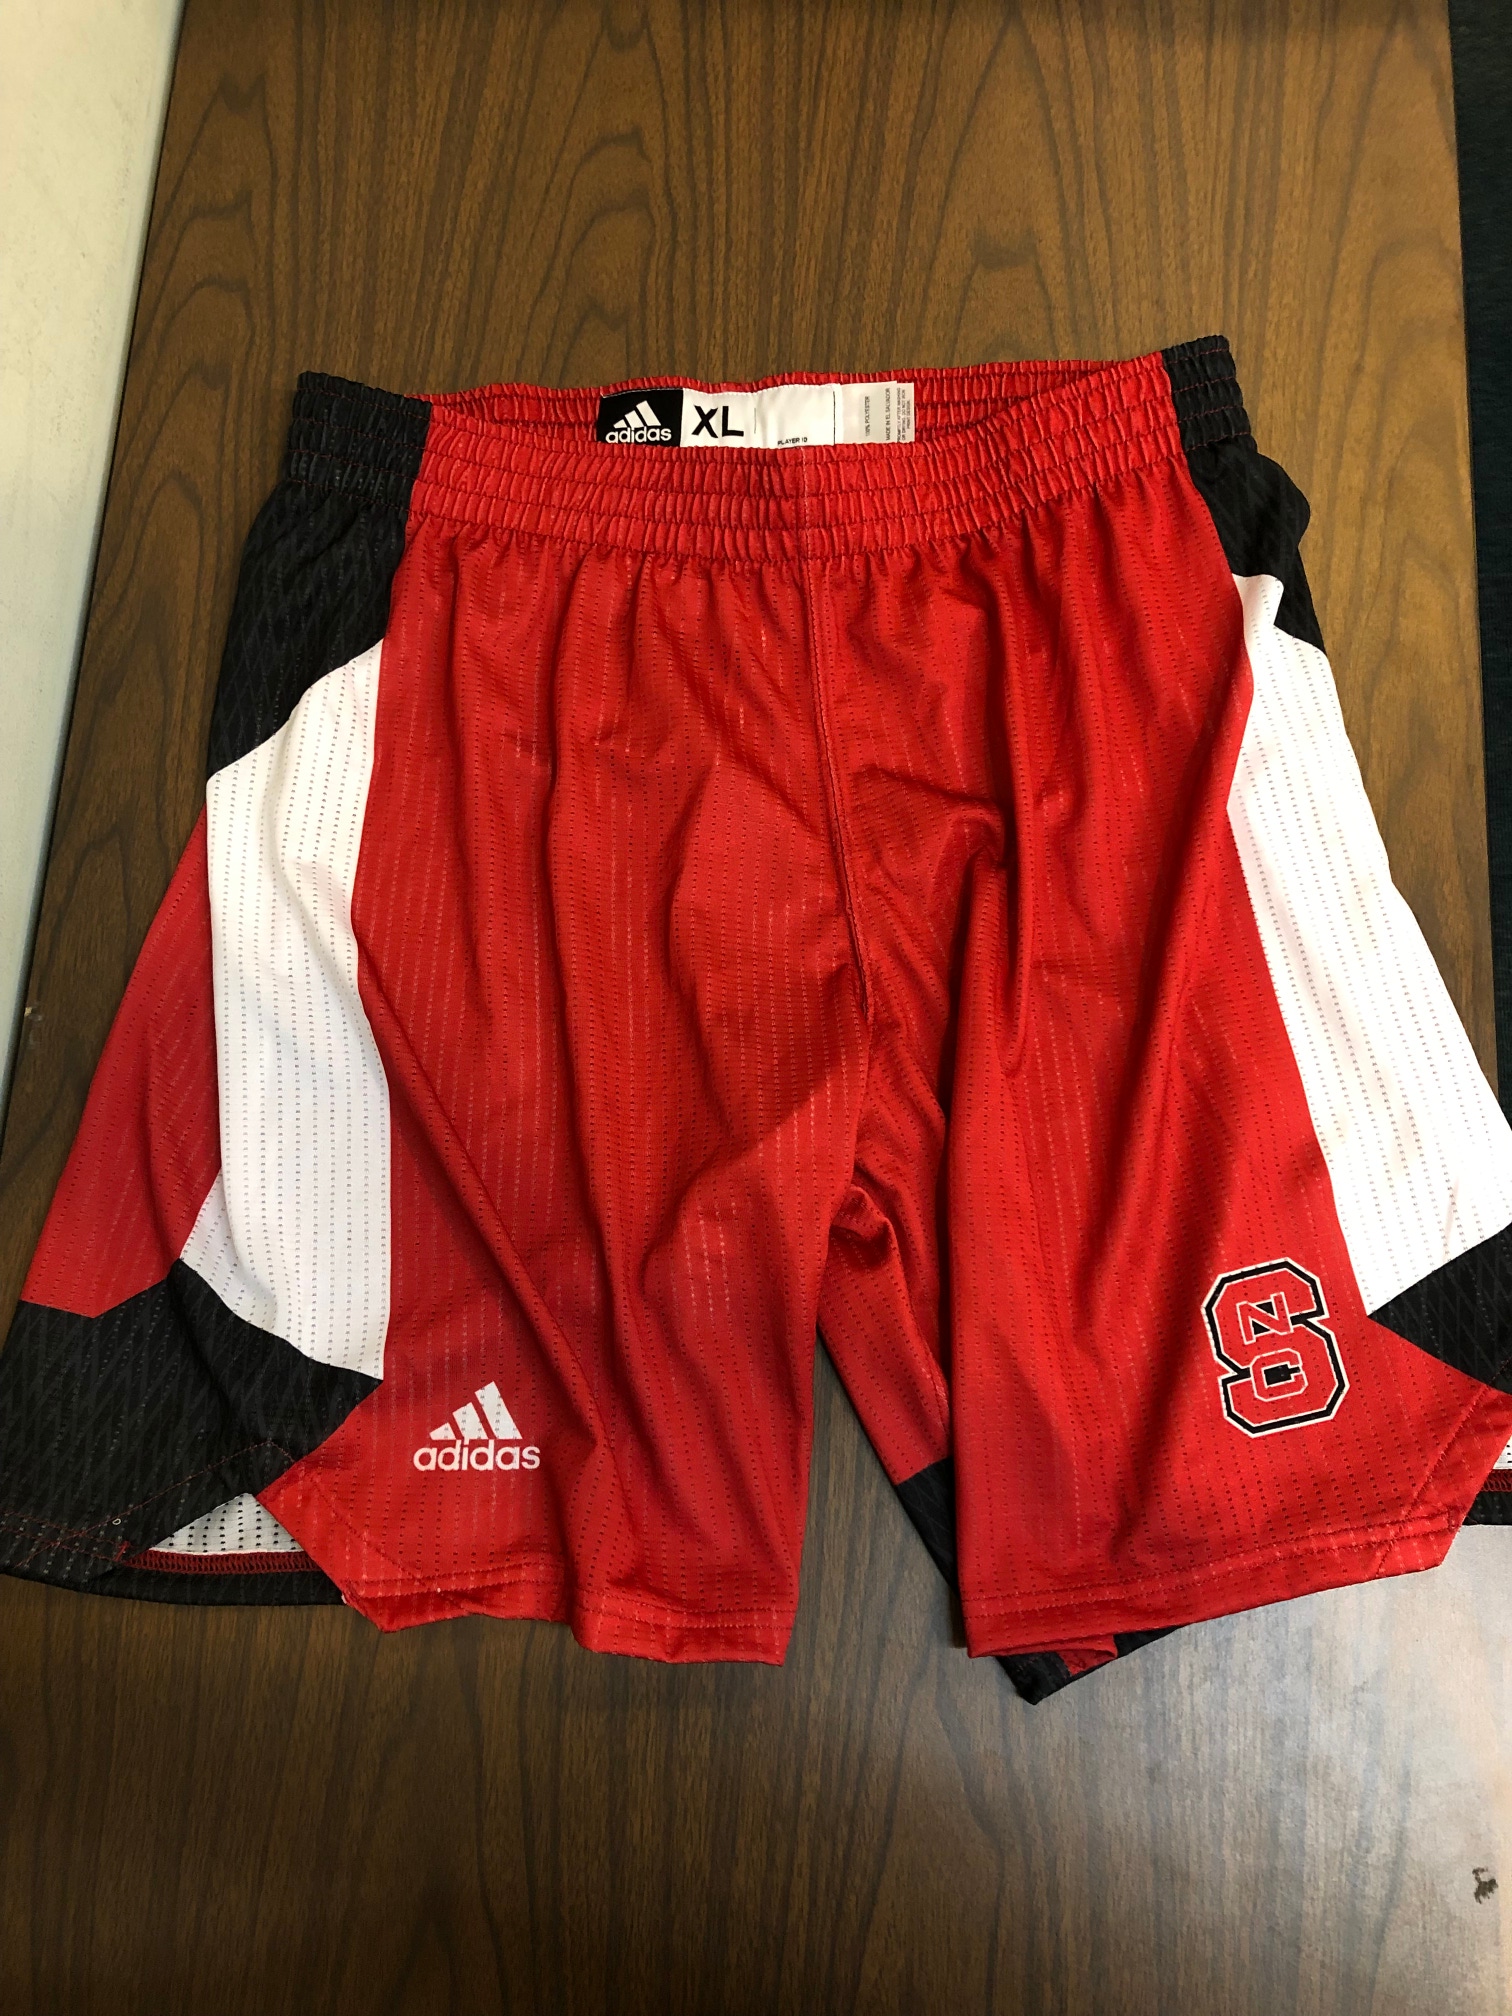 NC State Adidas Red New XL Basketball Uniform Shorts